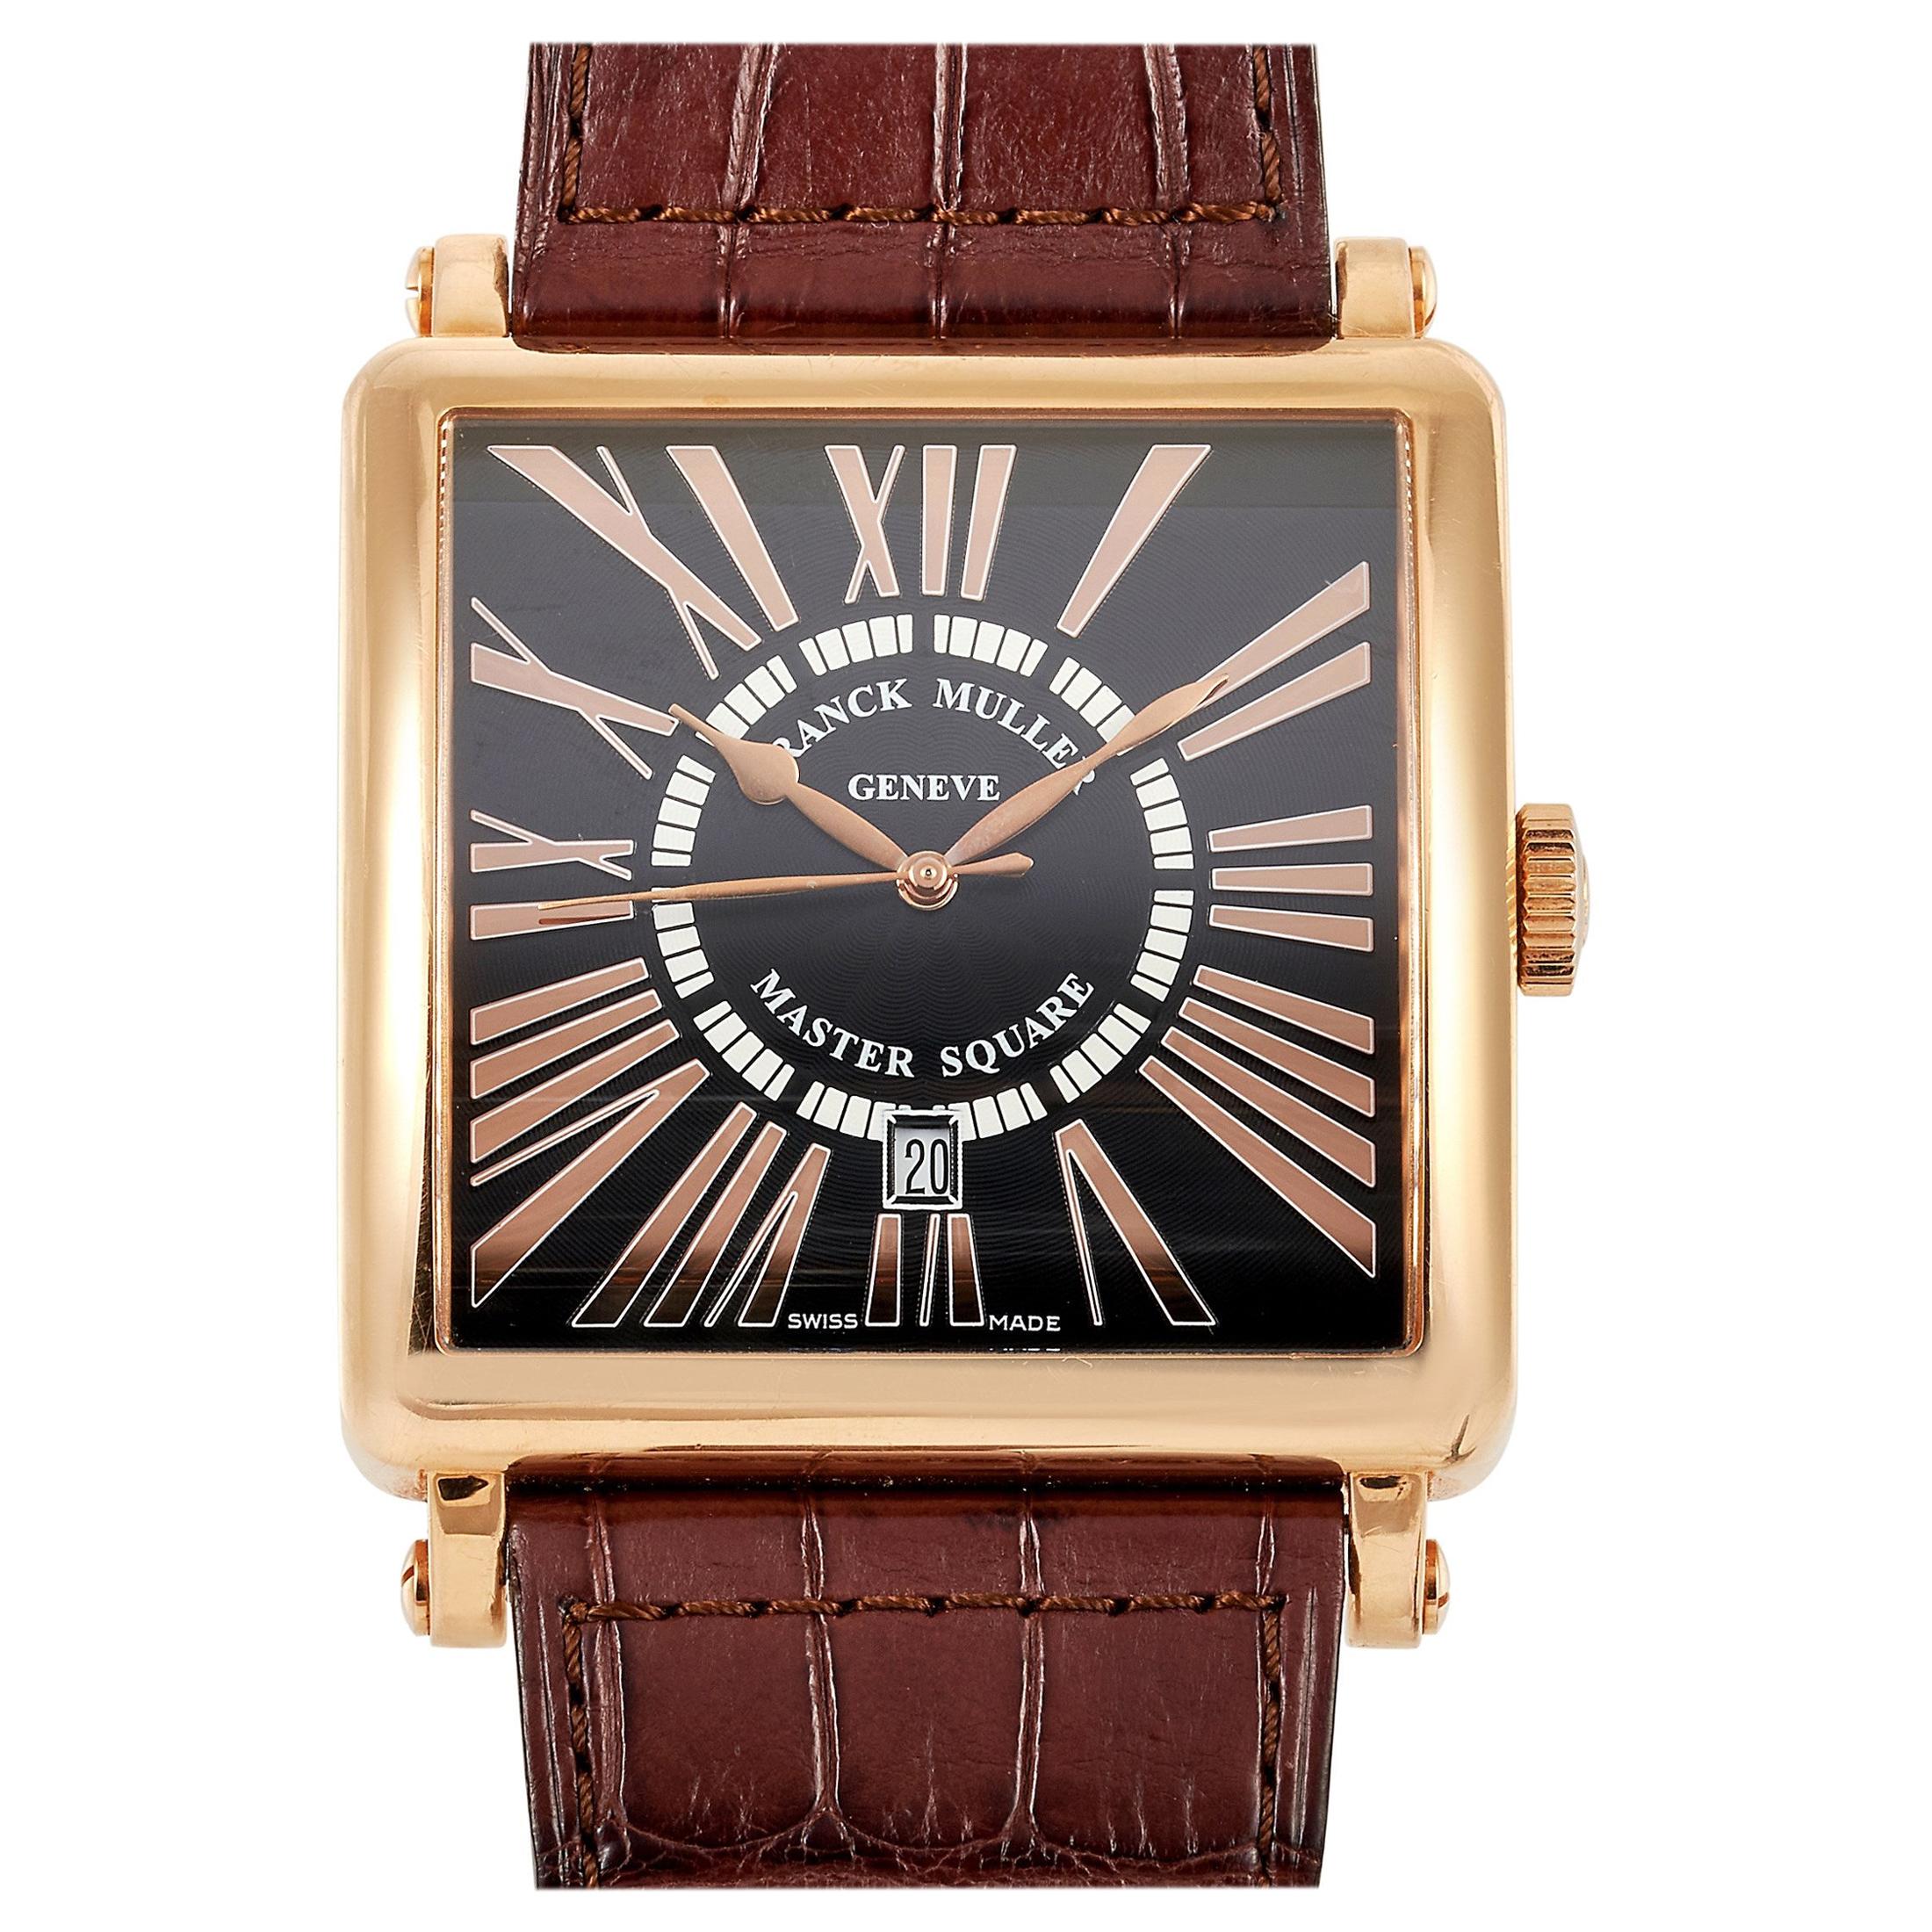 Franck Muller Master Square Black Dial Yellow Gold Watch 6000 K SC DT